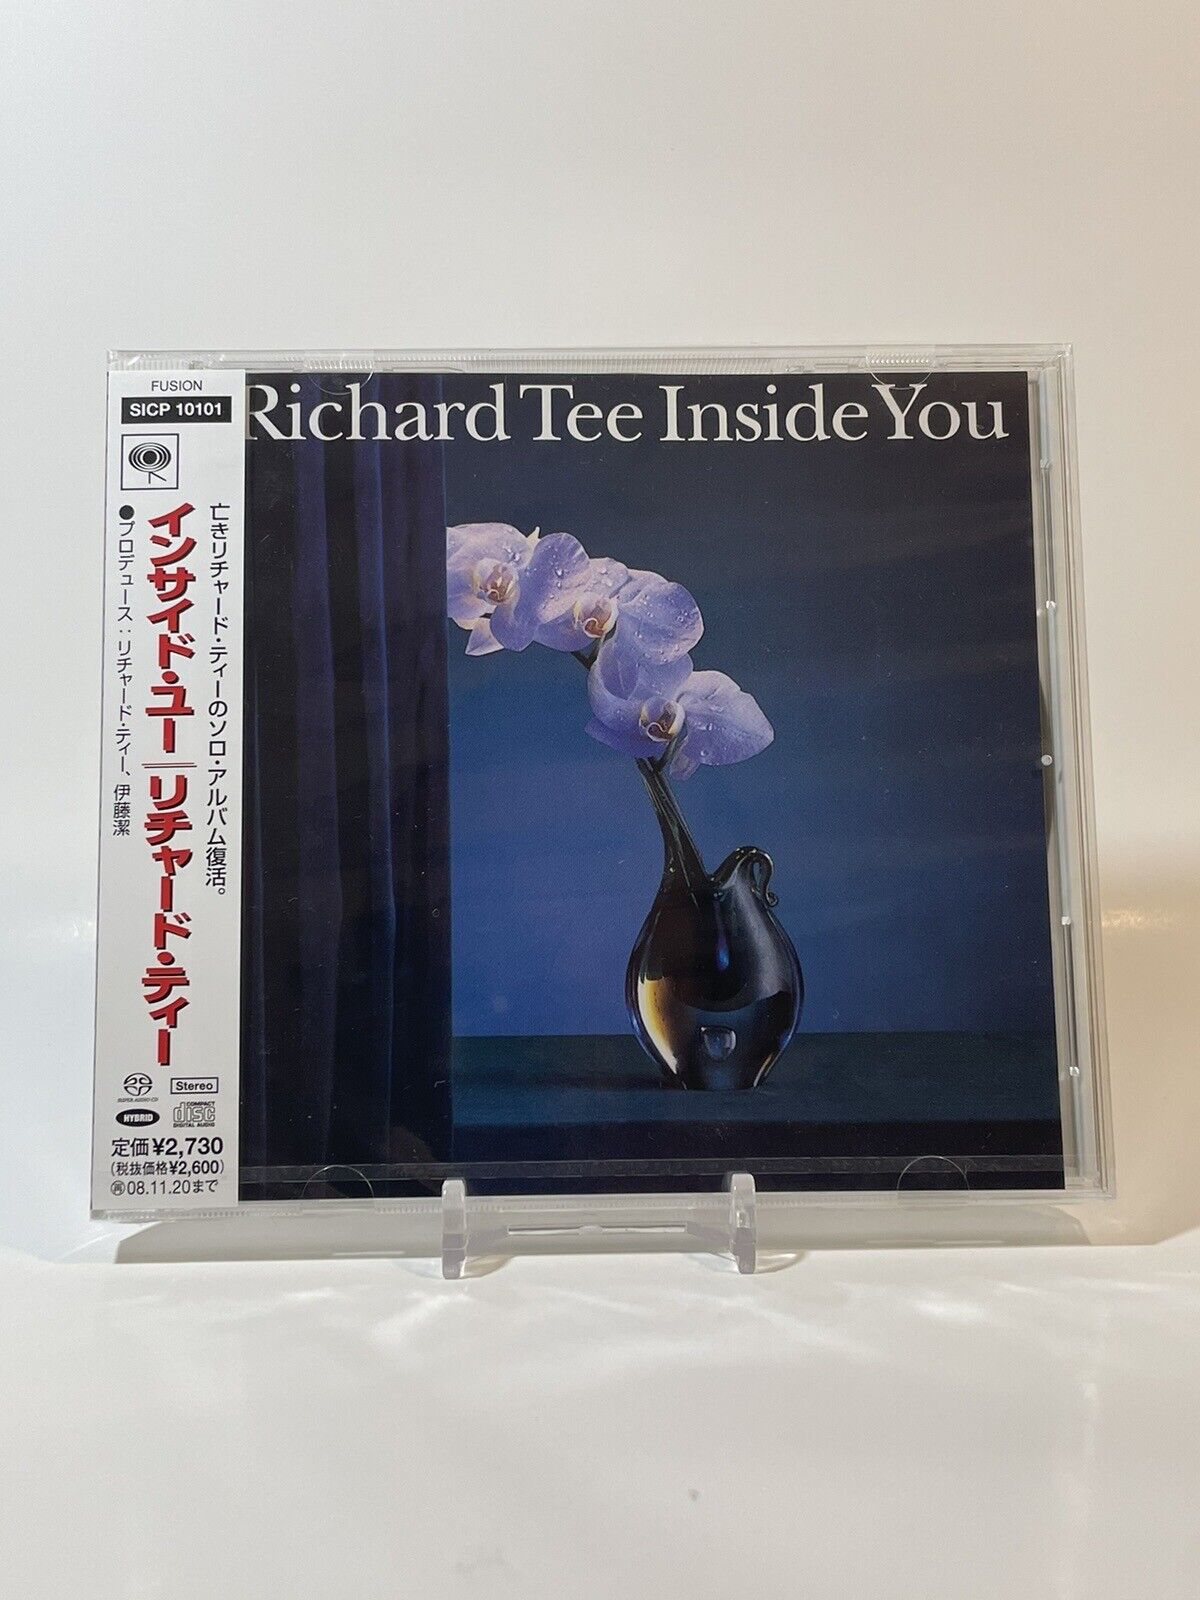 SACD: Richard Tee - Inside You - Super Audio CD Hybrid Stereo Japan SEALED